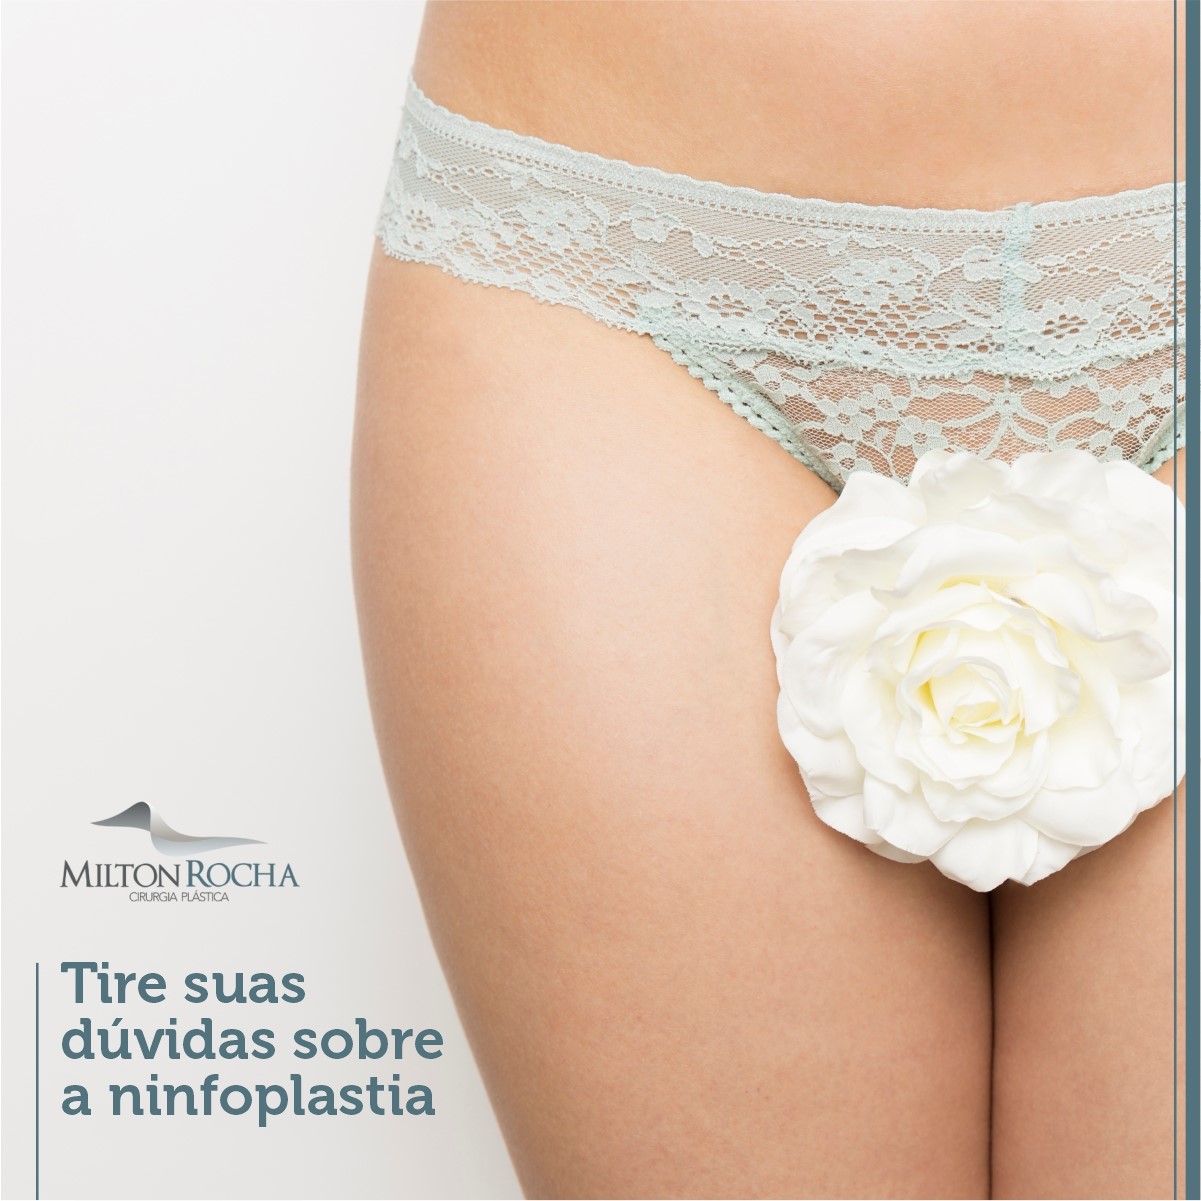 You are currently viewing Cirurgia Plástica Recife – Ninfoplastia – Tire suas dúvidas sobre a ninfoplastia.